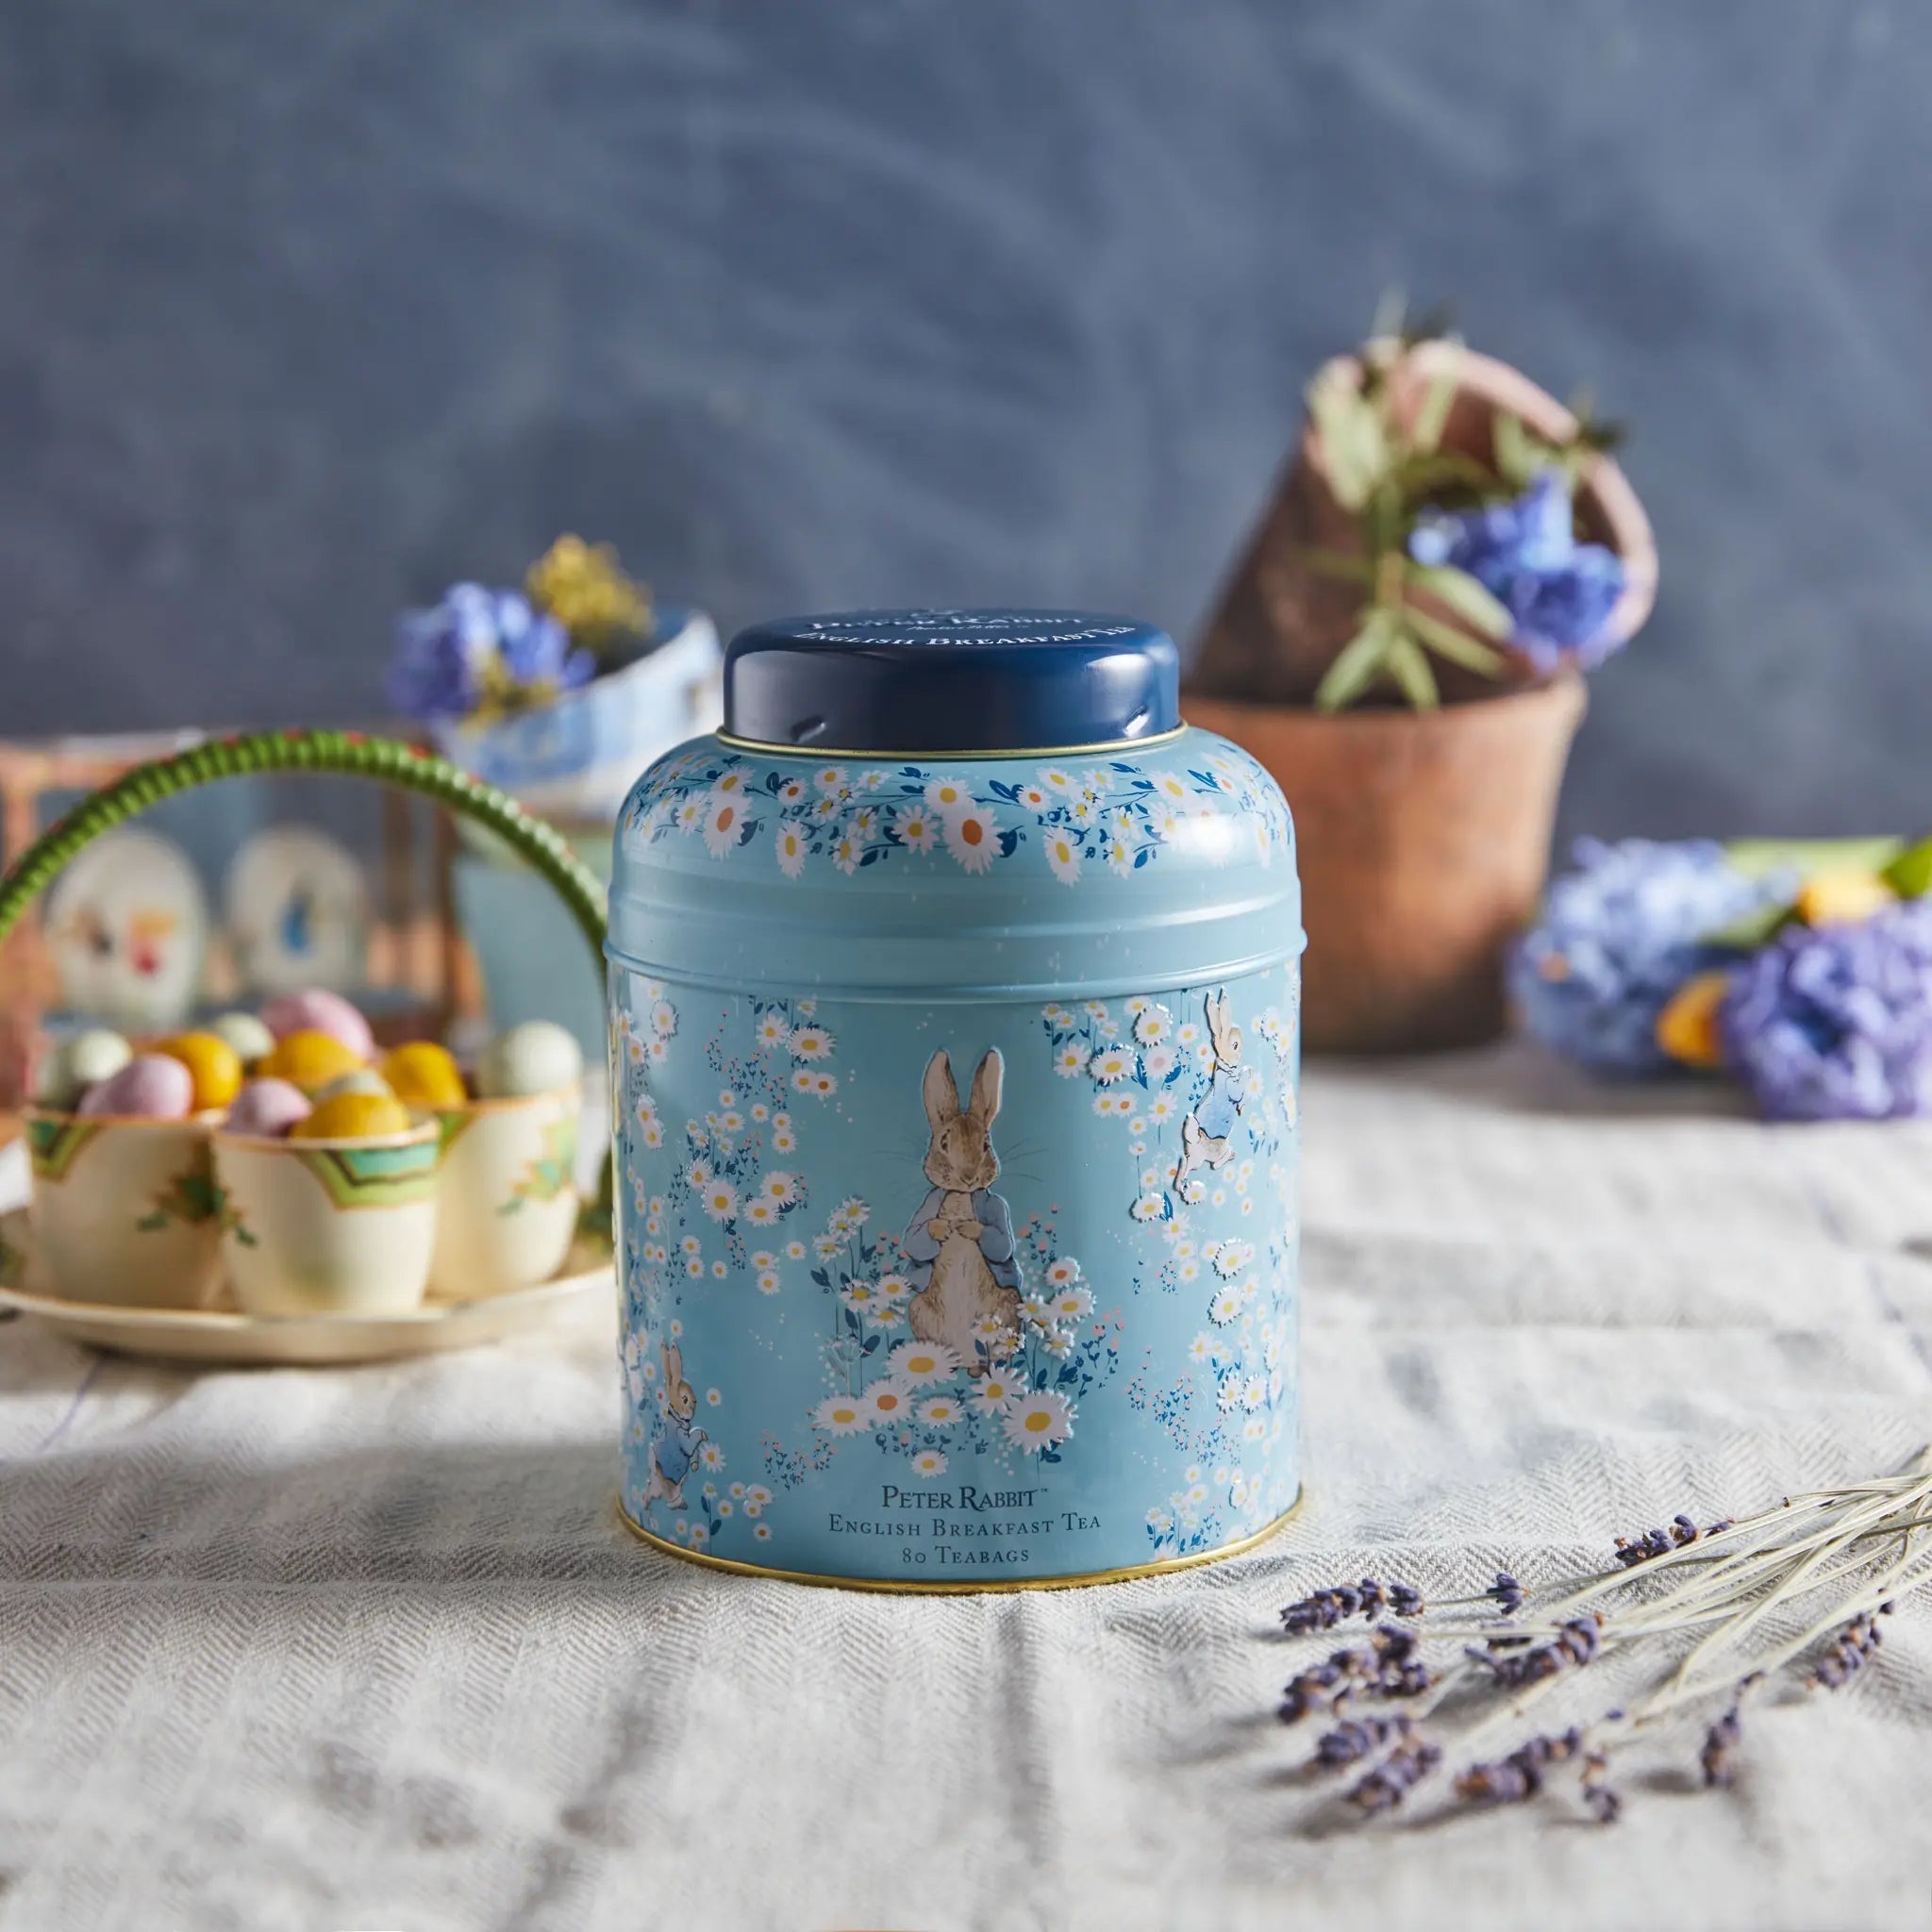 Peter Rabbit Daisies Tea Caddy with 80 English Breakfast Teabags Tea Tins New English Teas 